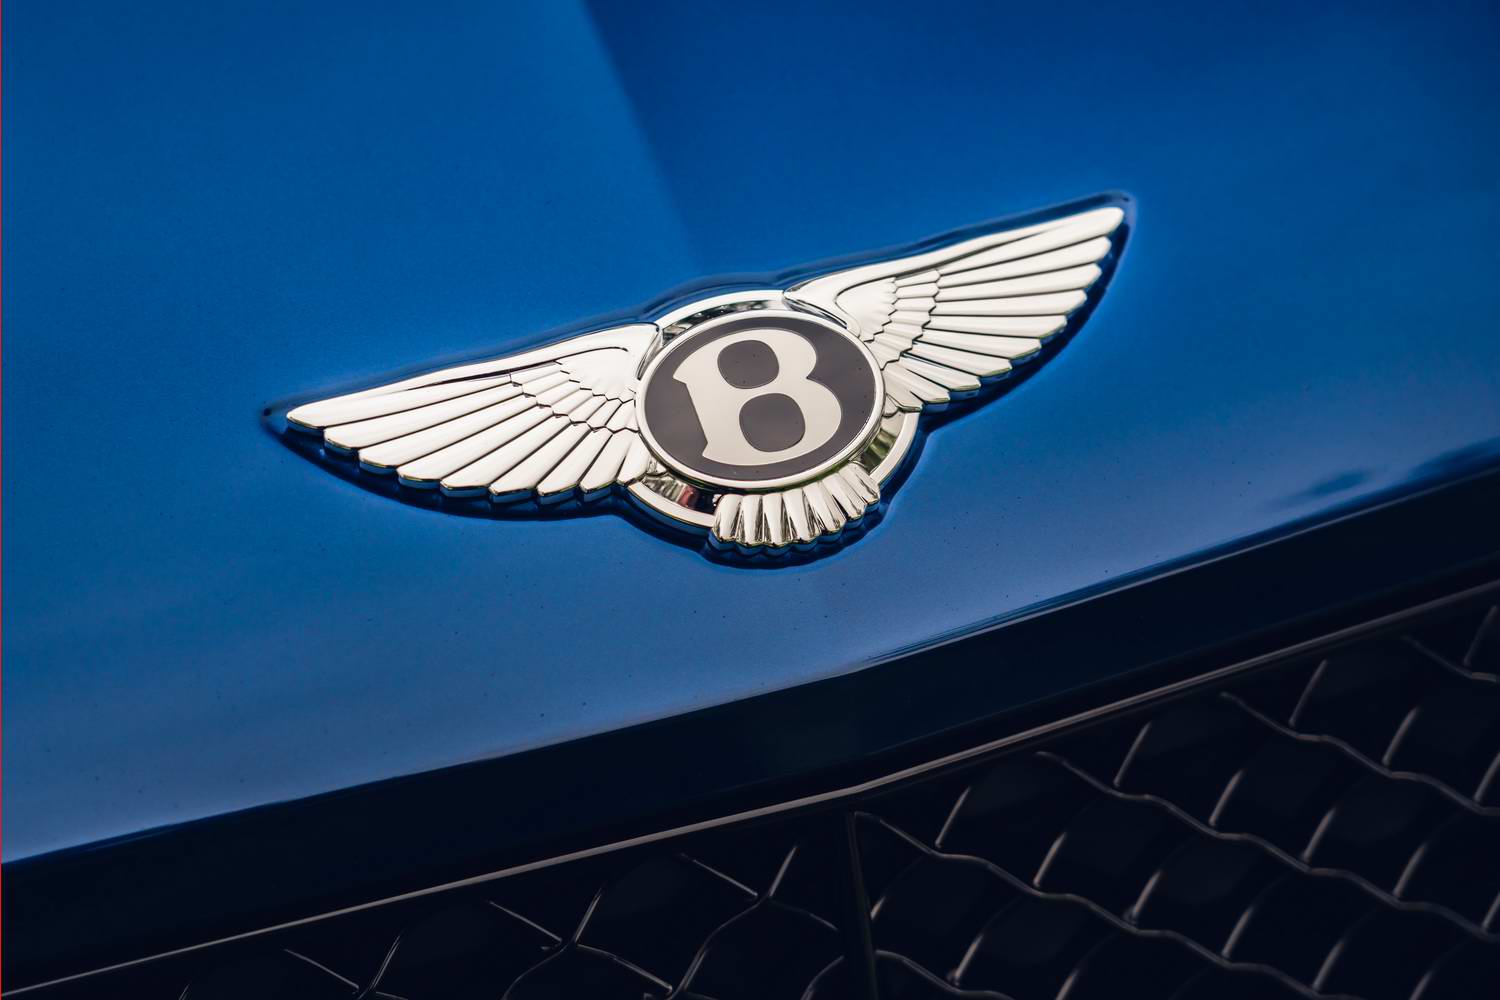 Bentley Bentayga V8 (2020)